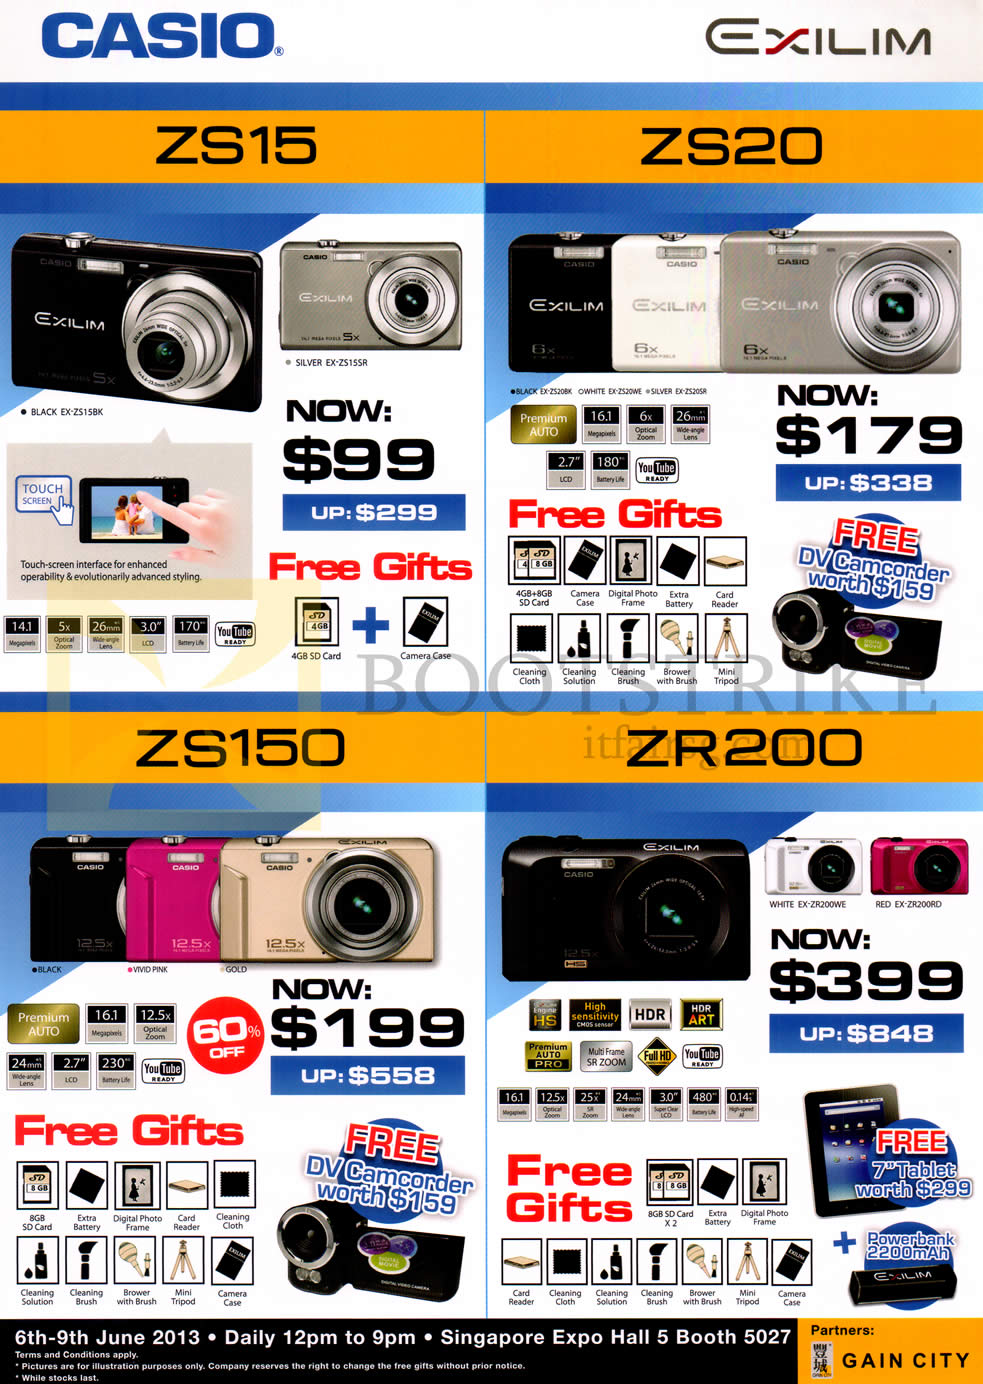 PC SHOW 2013 price list image brochure of Casio Digital Cameras ZS15, ZS20, ZS150, ZR200